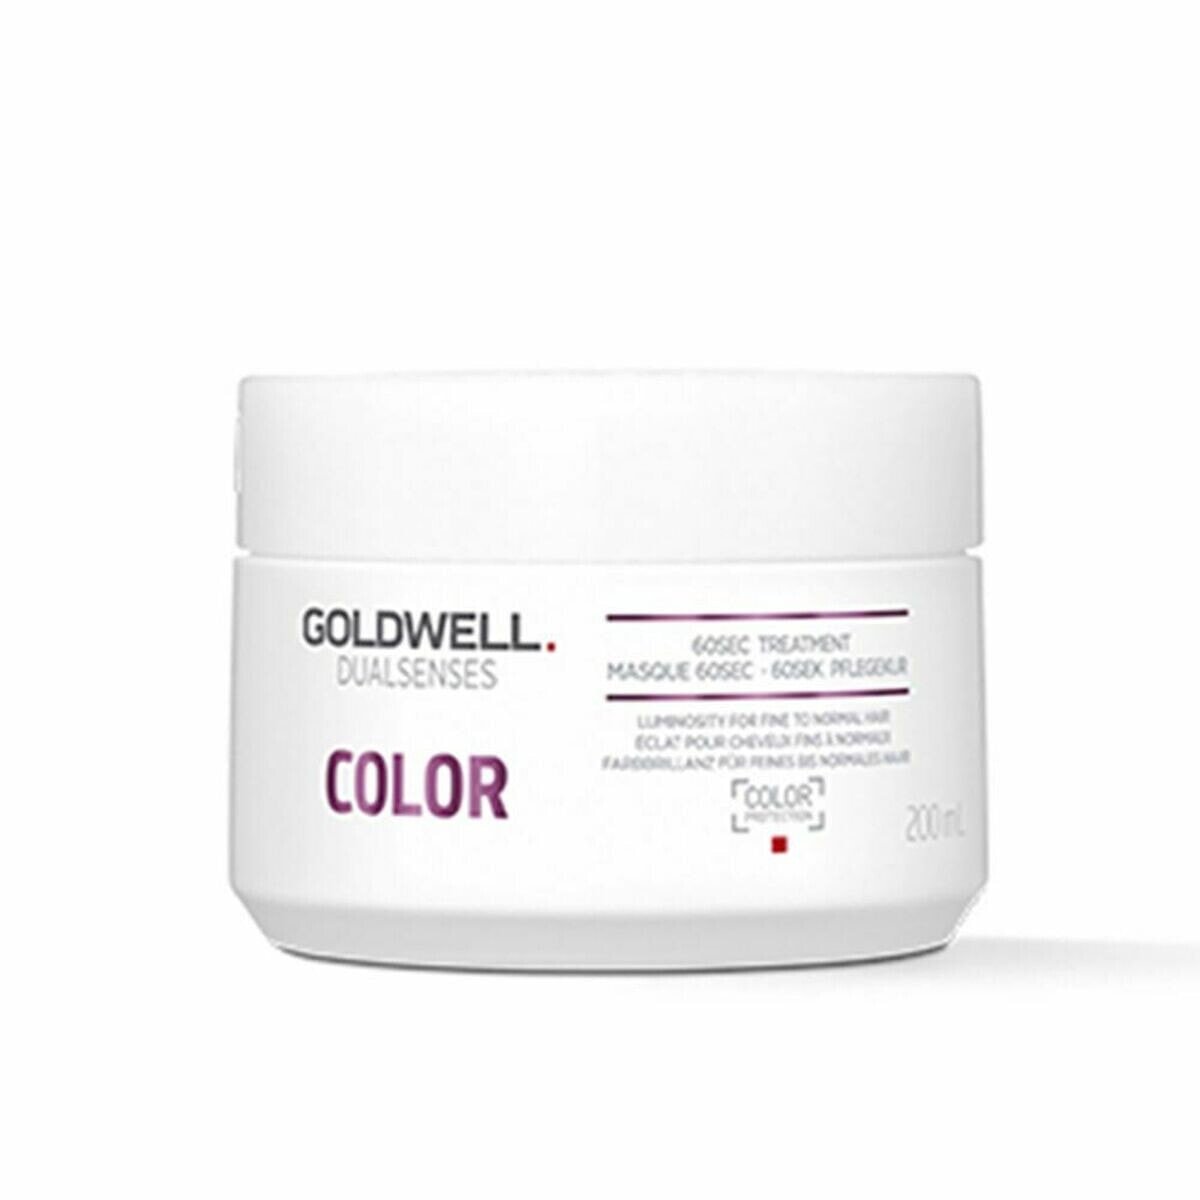 Защитная маска для цвета волос Goldwell Color 200 ml